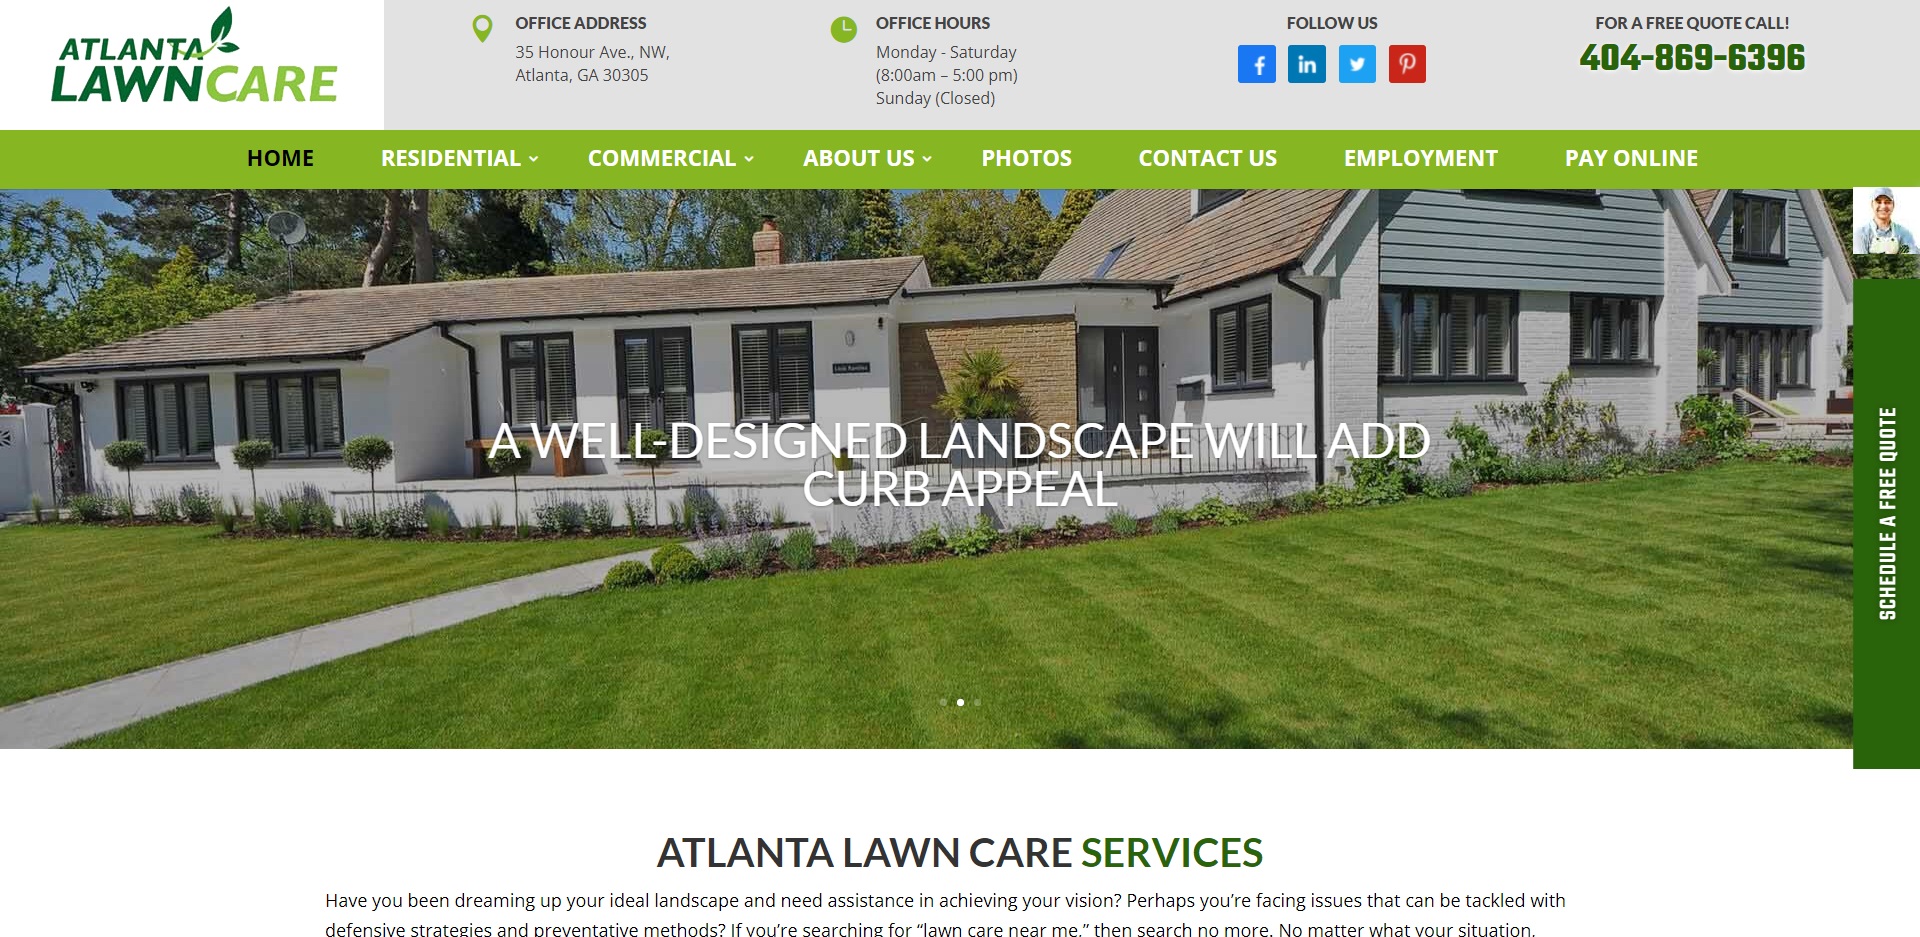 5 Best Landscaping Companies In Atlanta Ga, Best Landscaping Companies In Atlanta